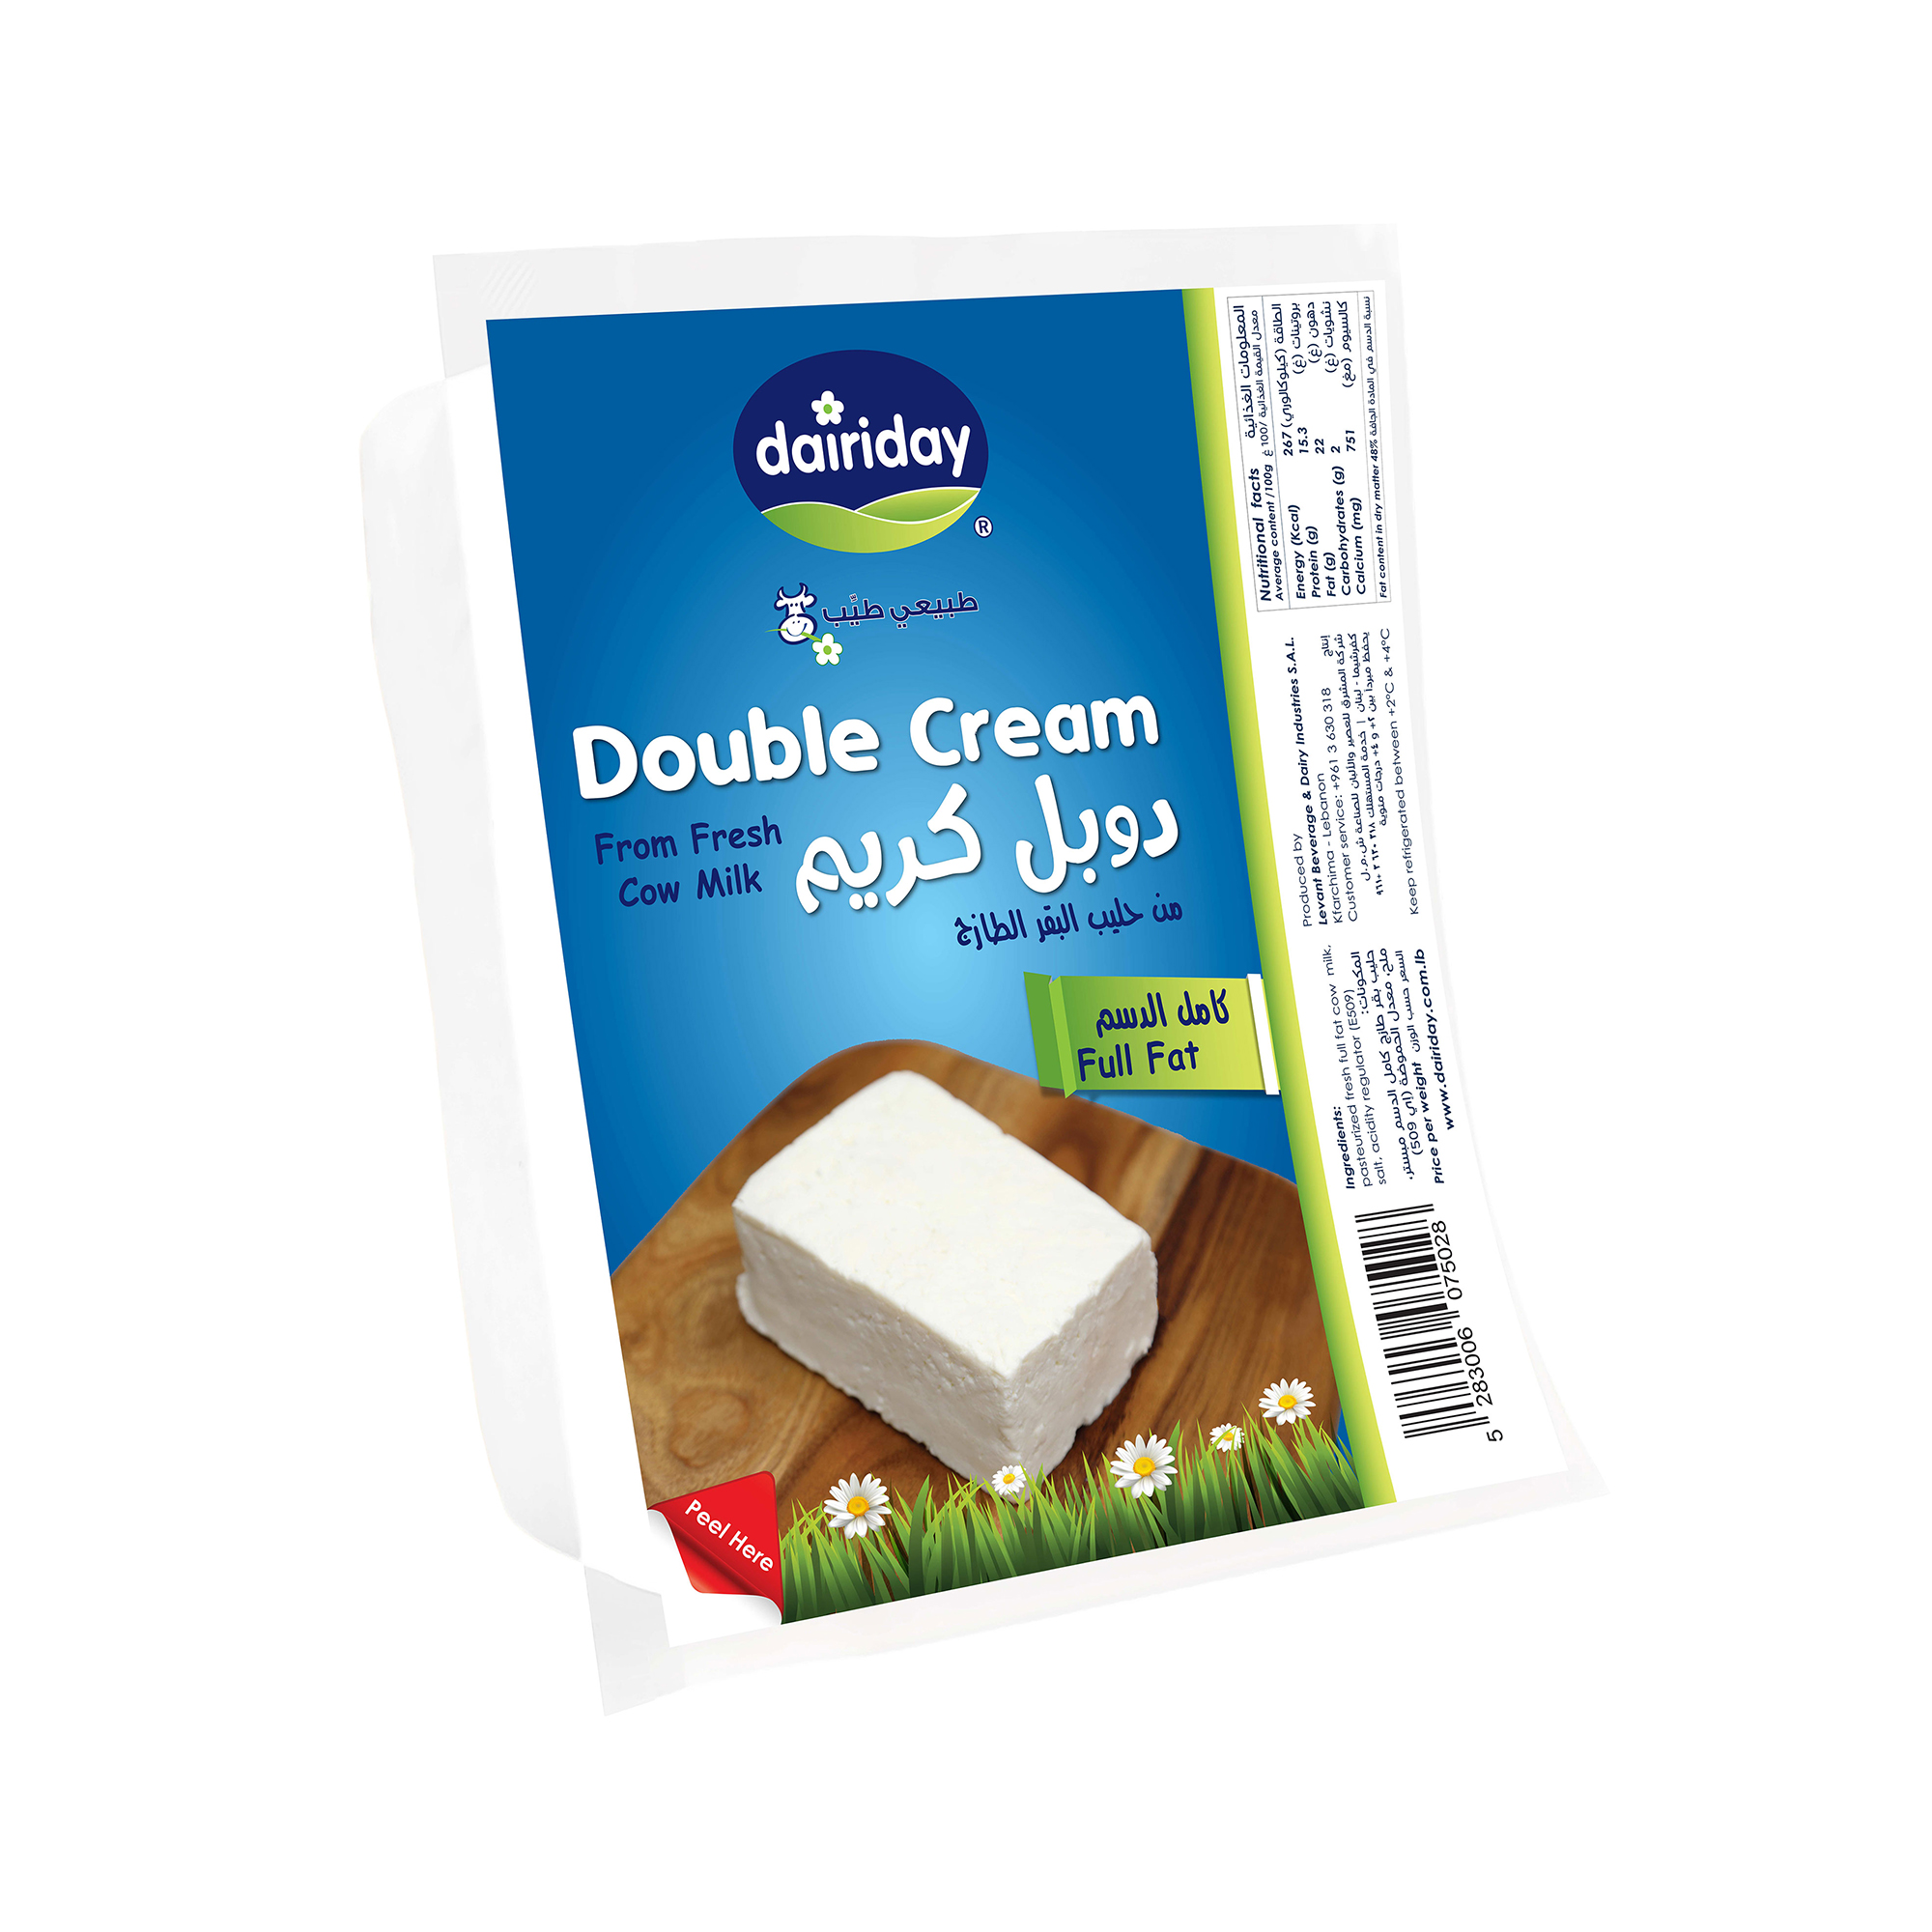 Dairiday-Double-Creme-white-cheese